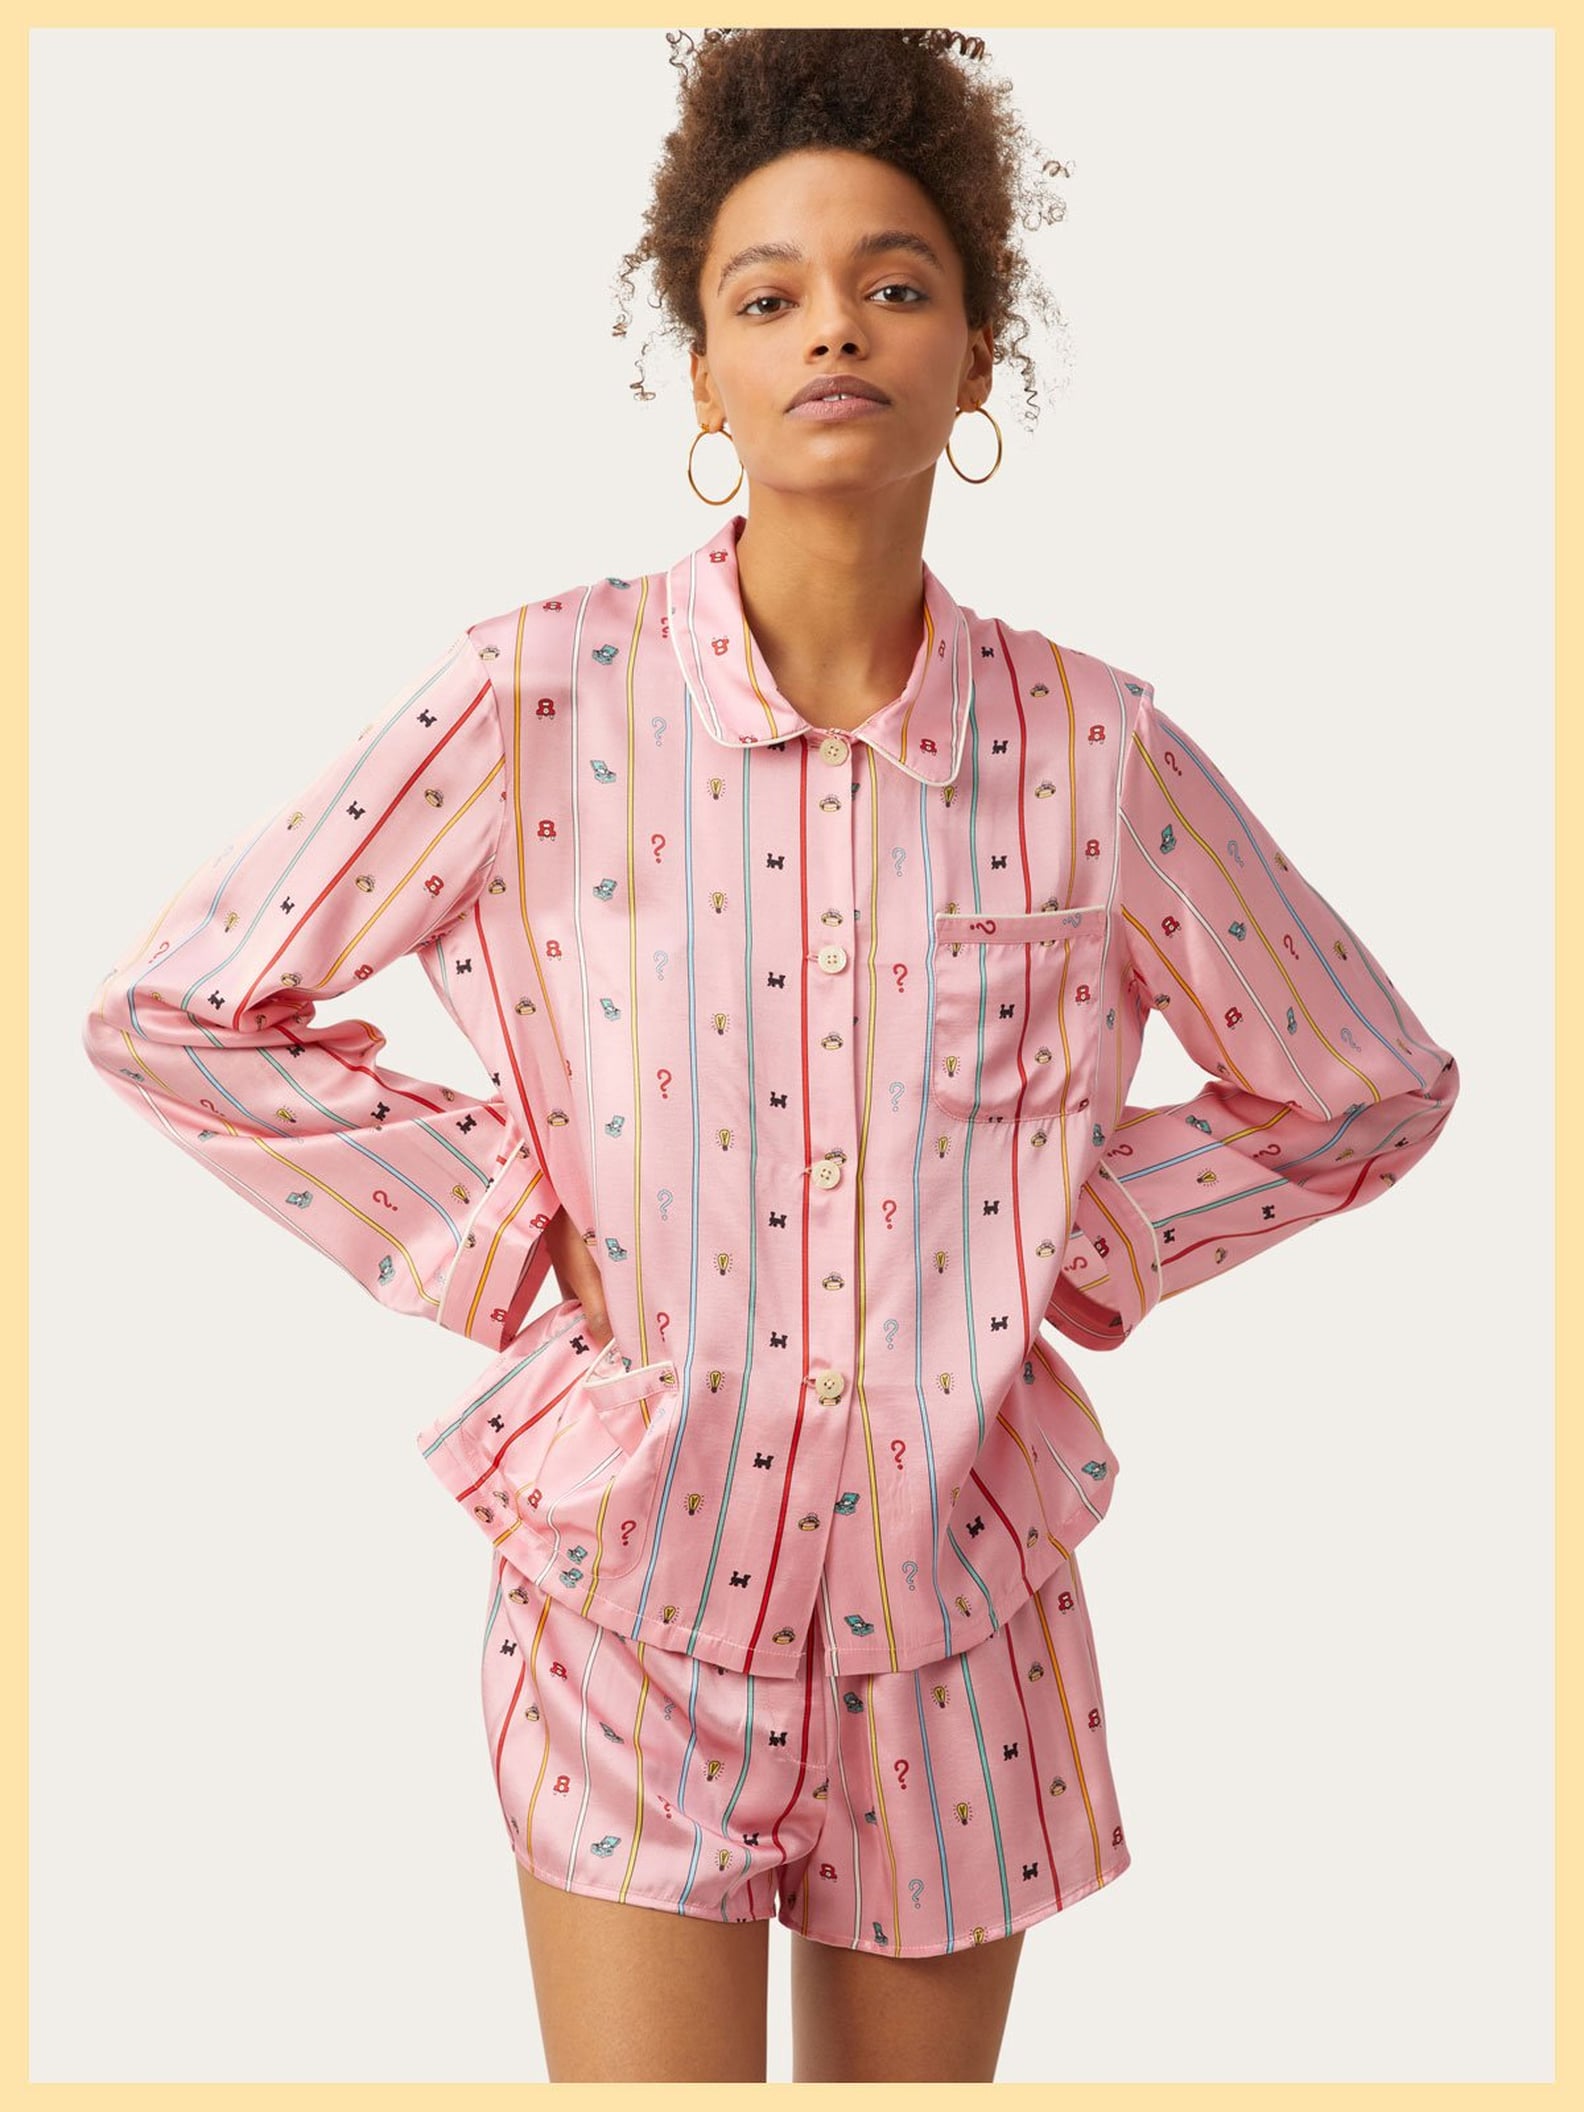 Morgan Lane Created a Stylish Monopoly Pajama Collection | POPSUGAR Fashion